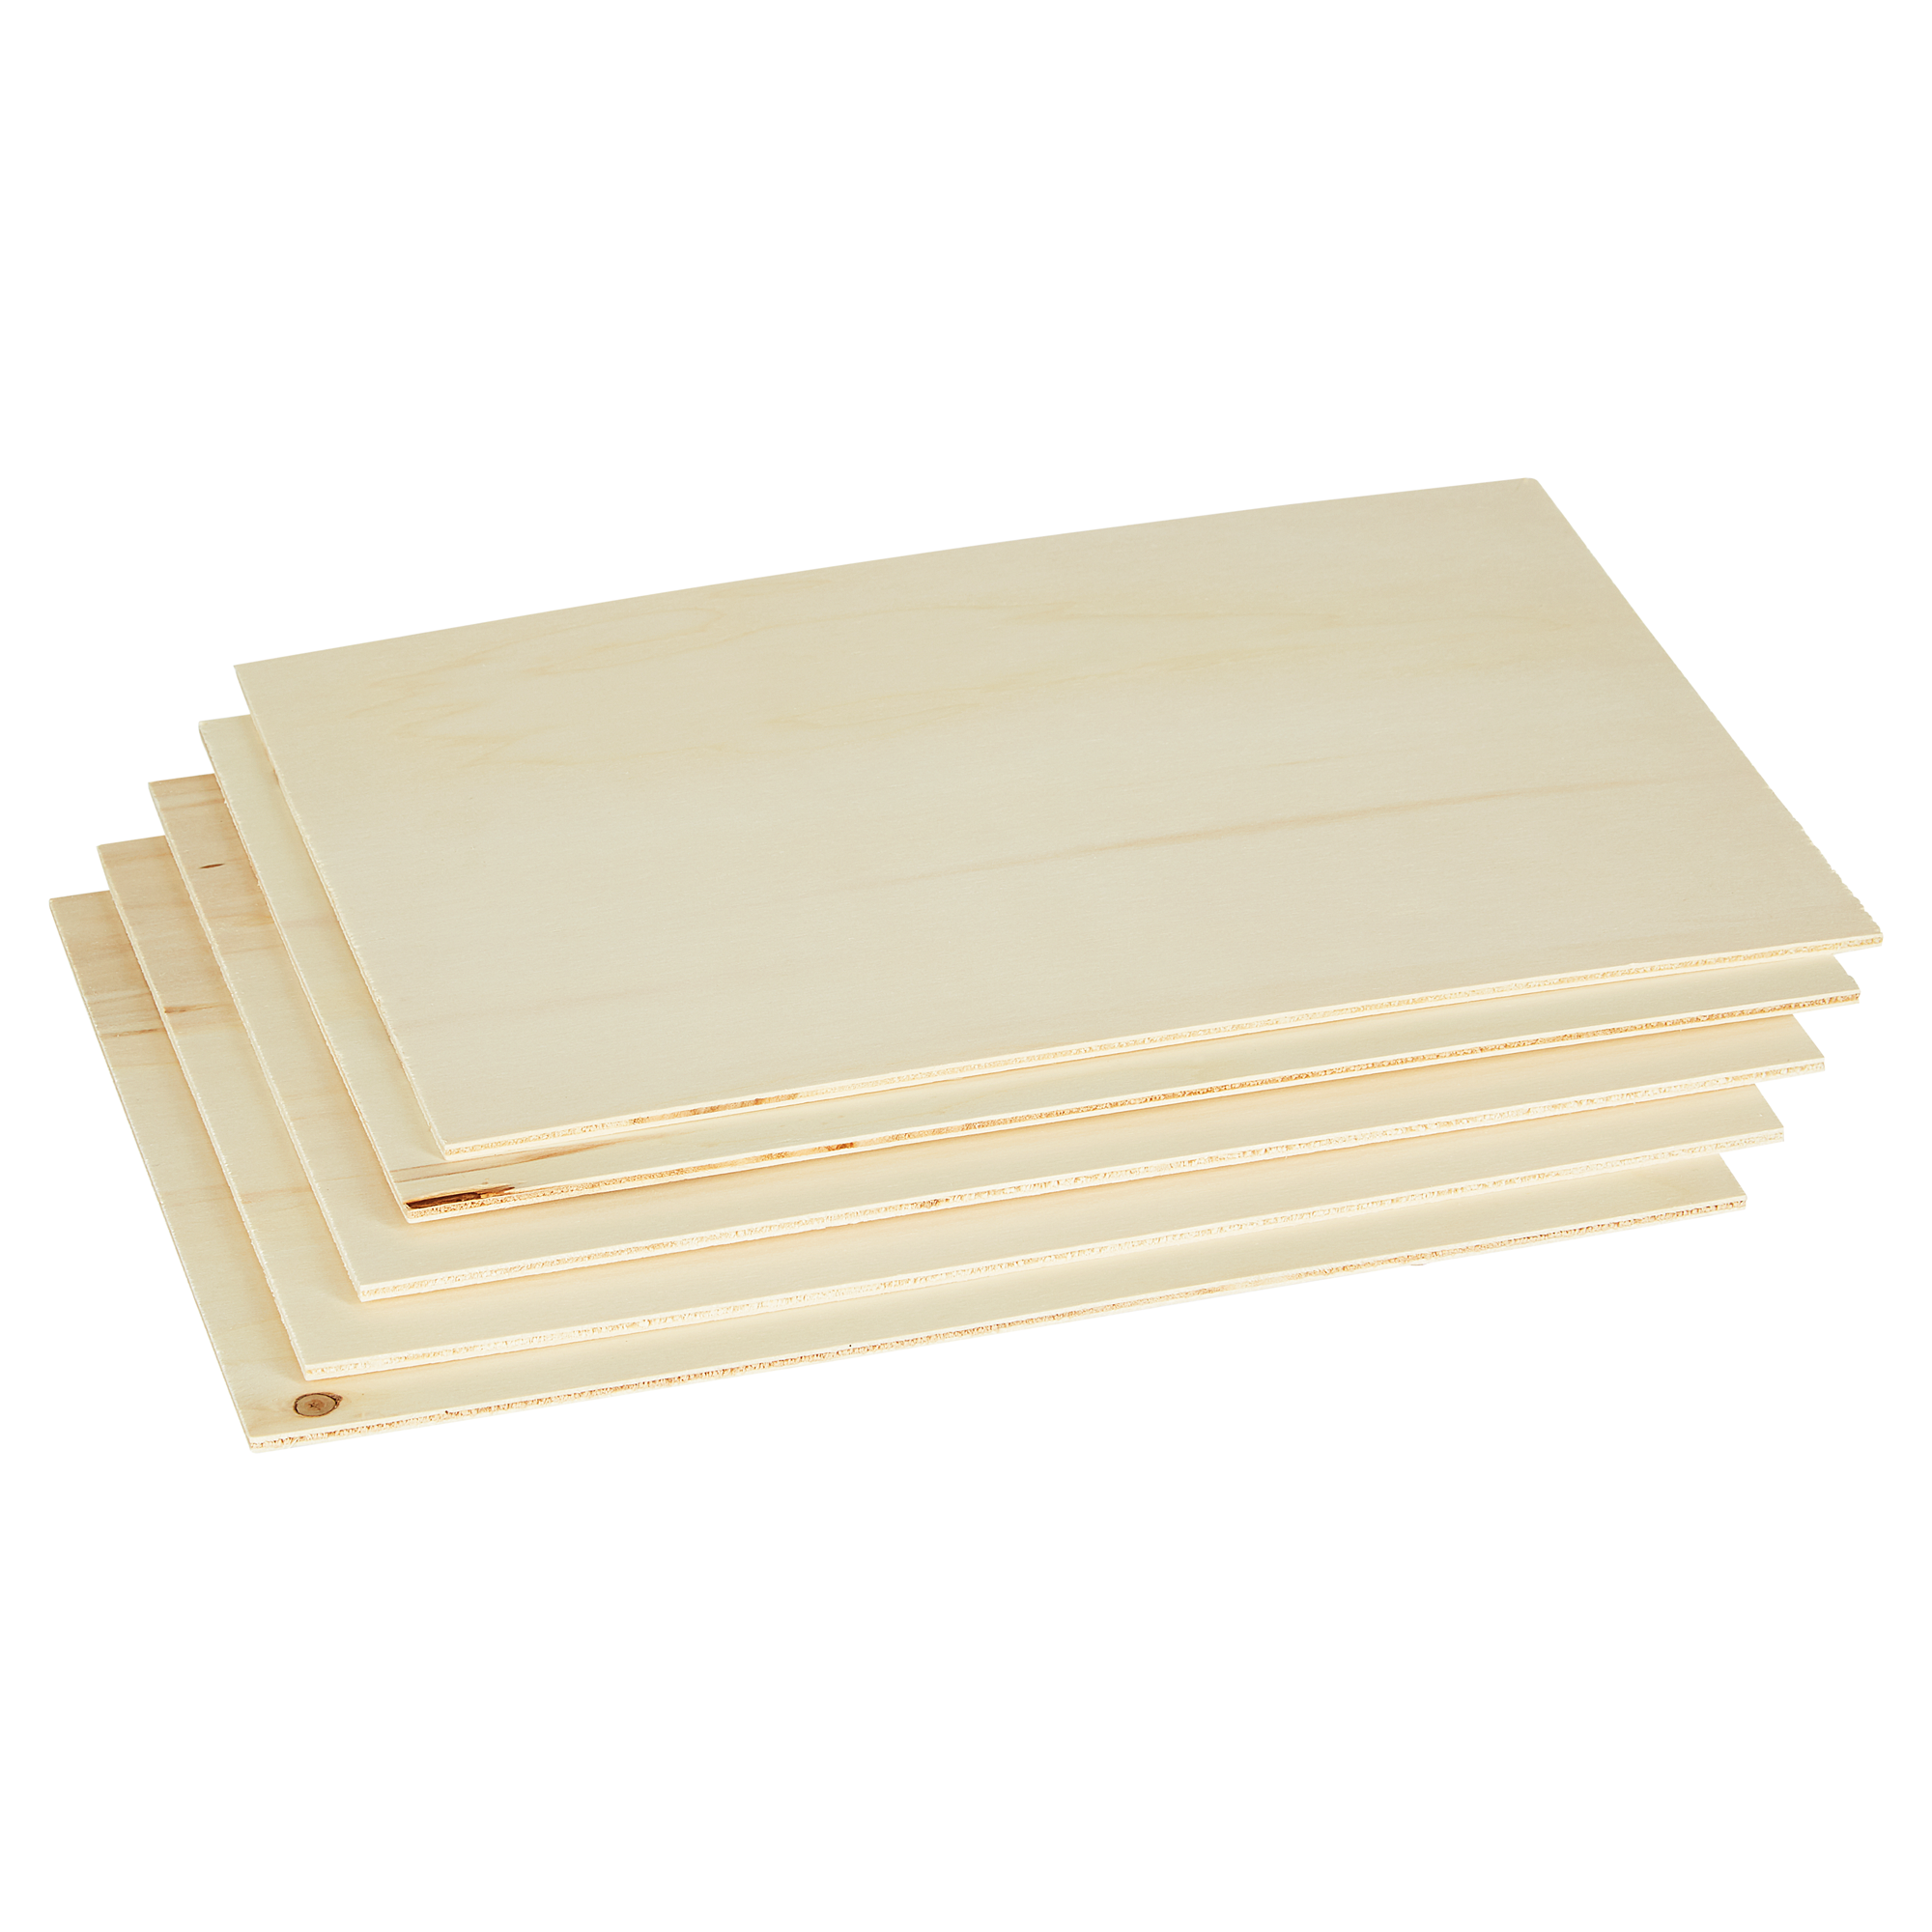 3St Qualitäts-Sperrholz 3mm Pappel 152x57cm Furnierplatte Modellbau Holz basteln 